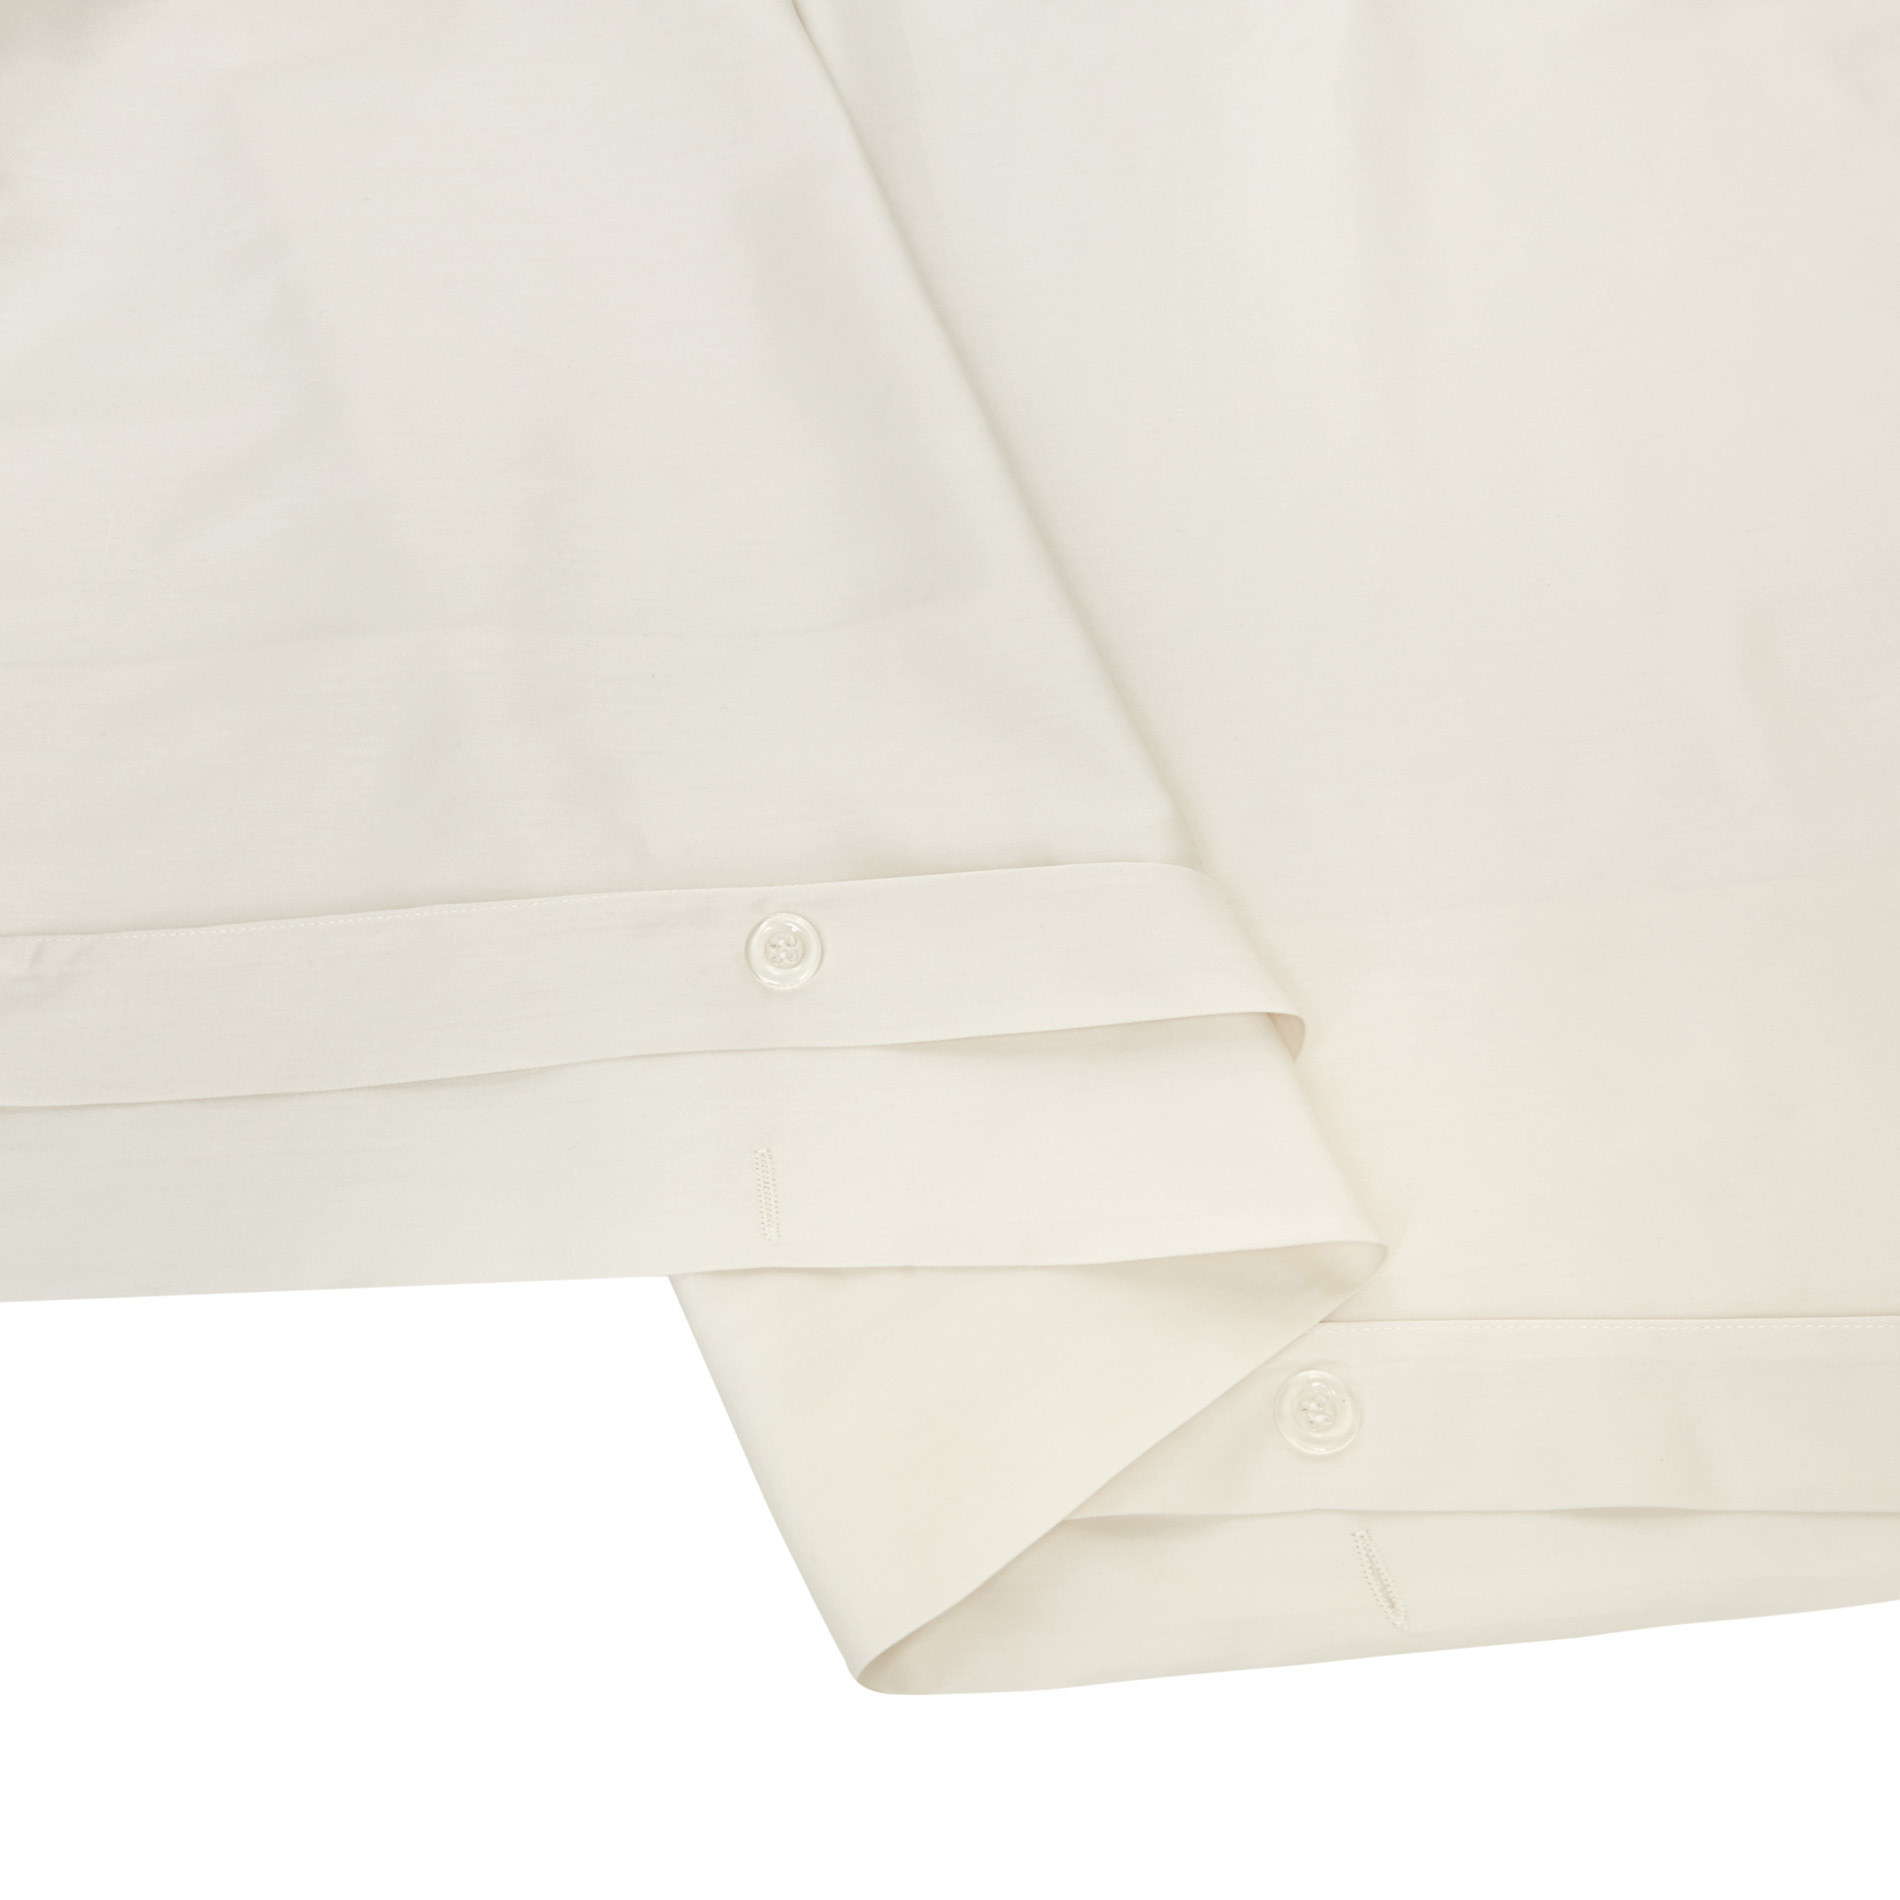 Zefiro duvet cover set in 100% cotton satin, White Milk, large image number 2